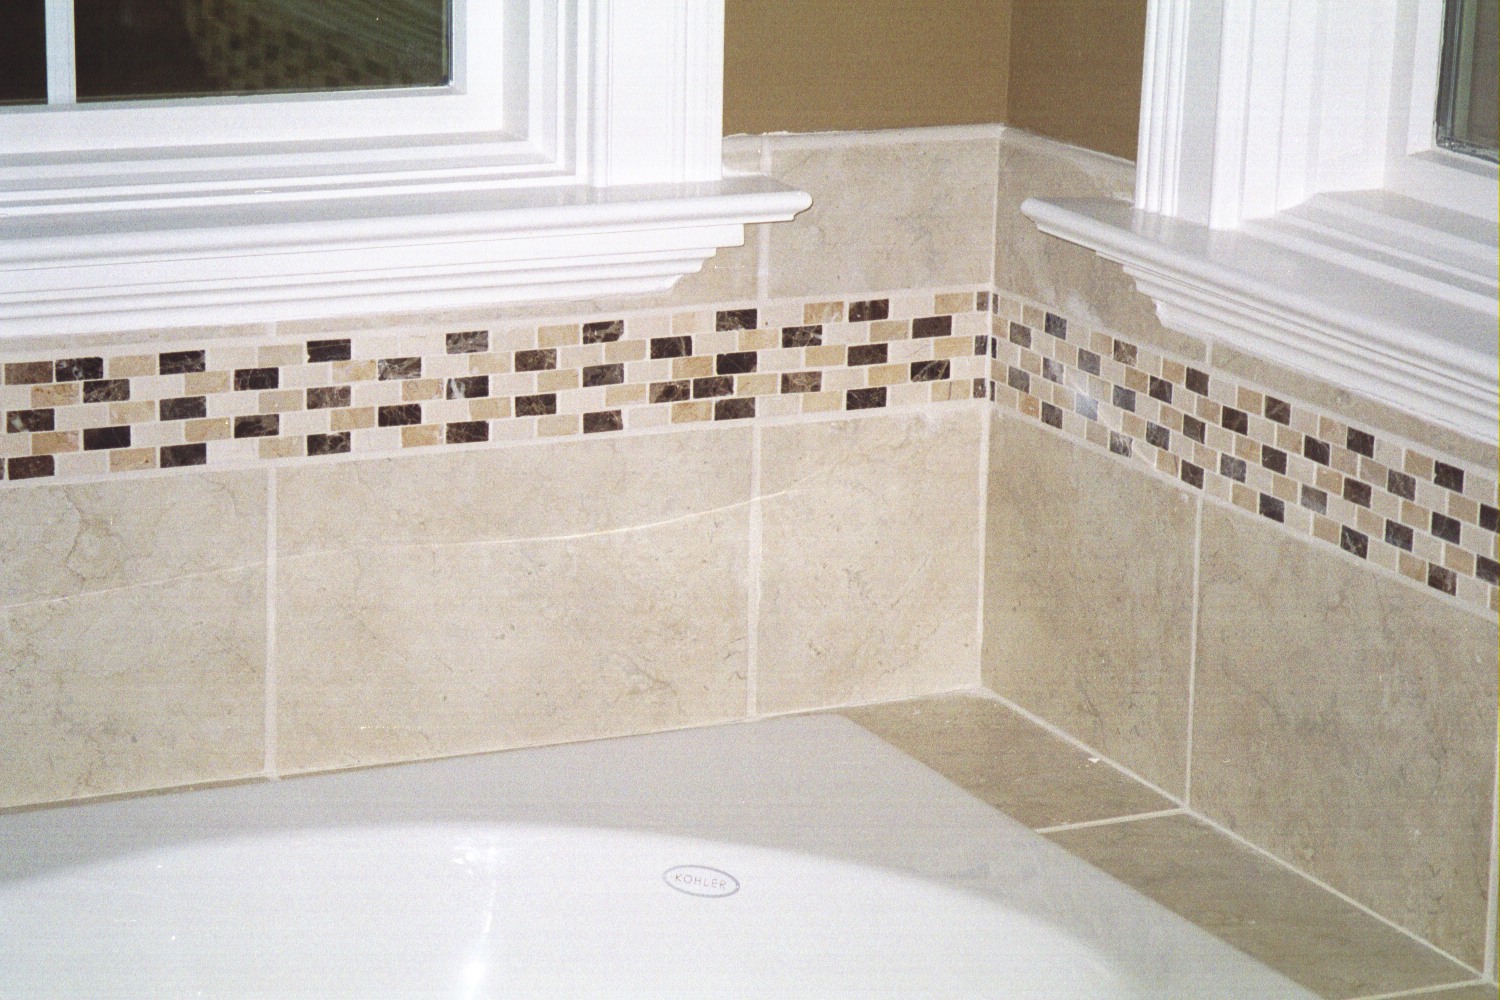 Bathroom wall tile natural stone border marble and travertine BELK Tile